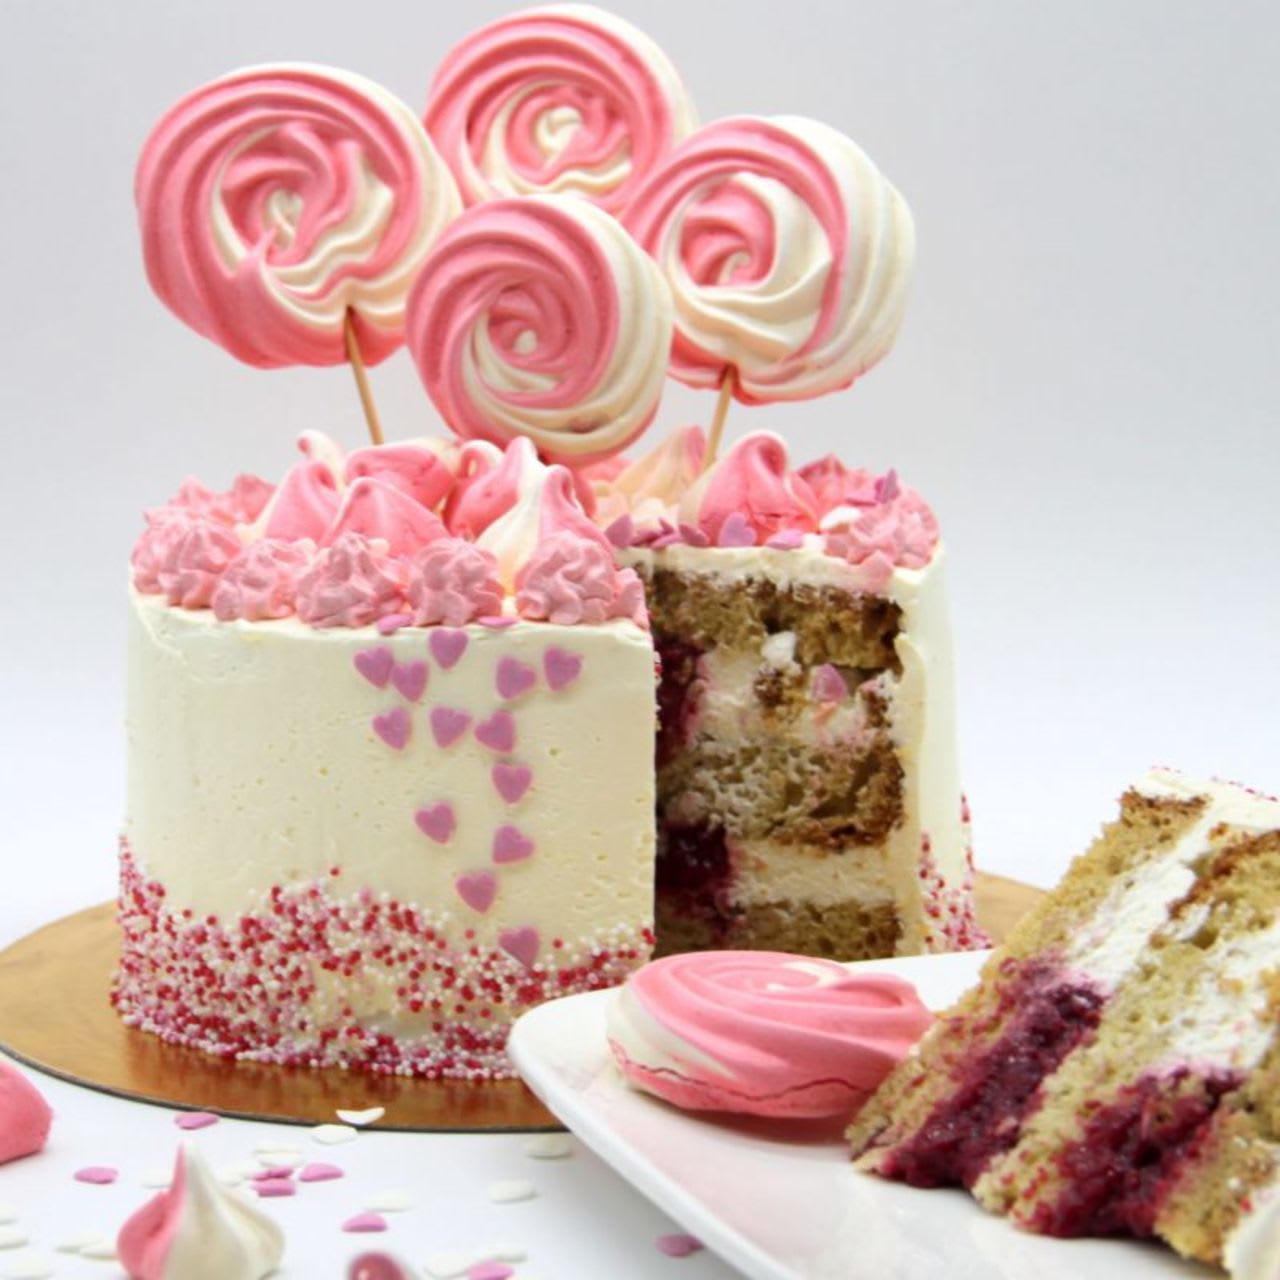 Allocakes - Trouve ton gâteau ou ton pâtissier cake designer